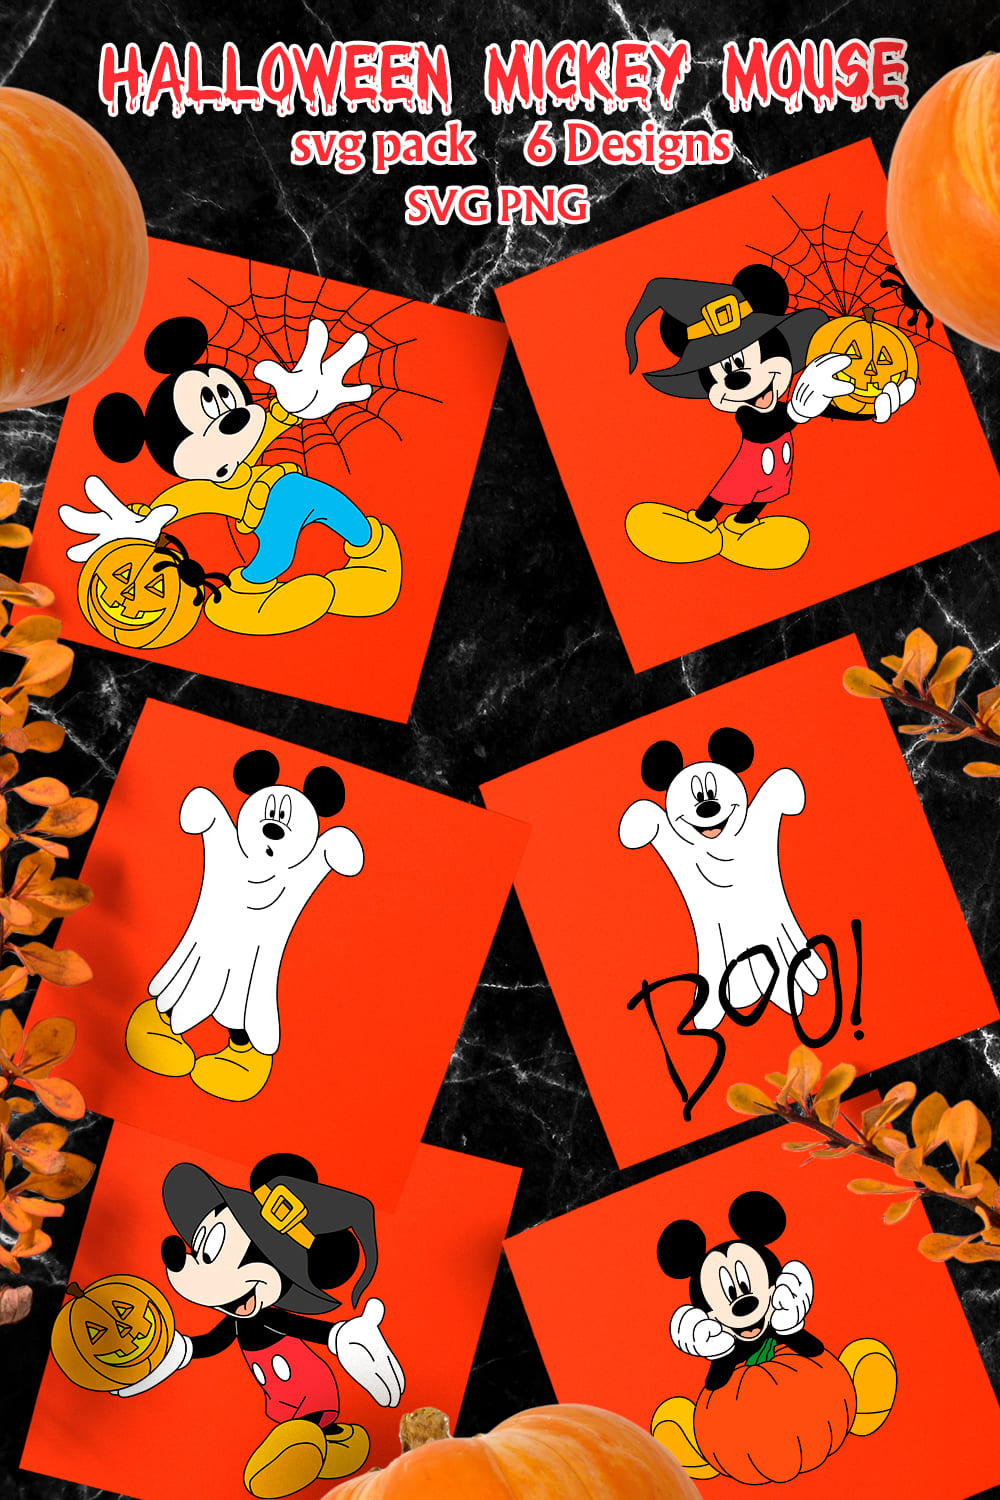 Halloween Mickey Mouse Svg - Pinterest.